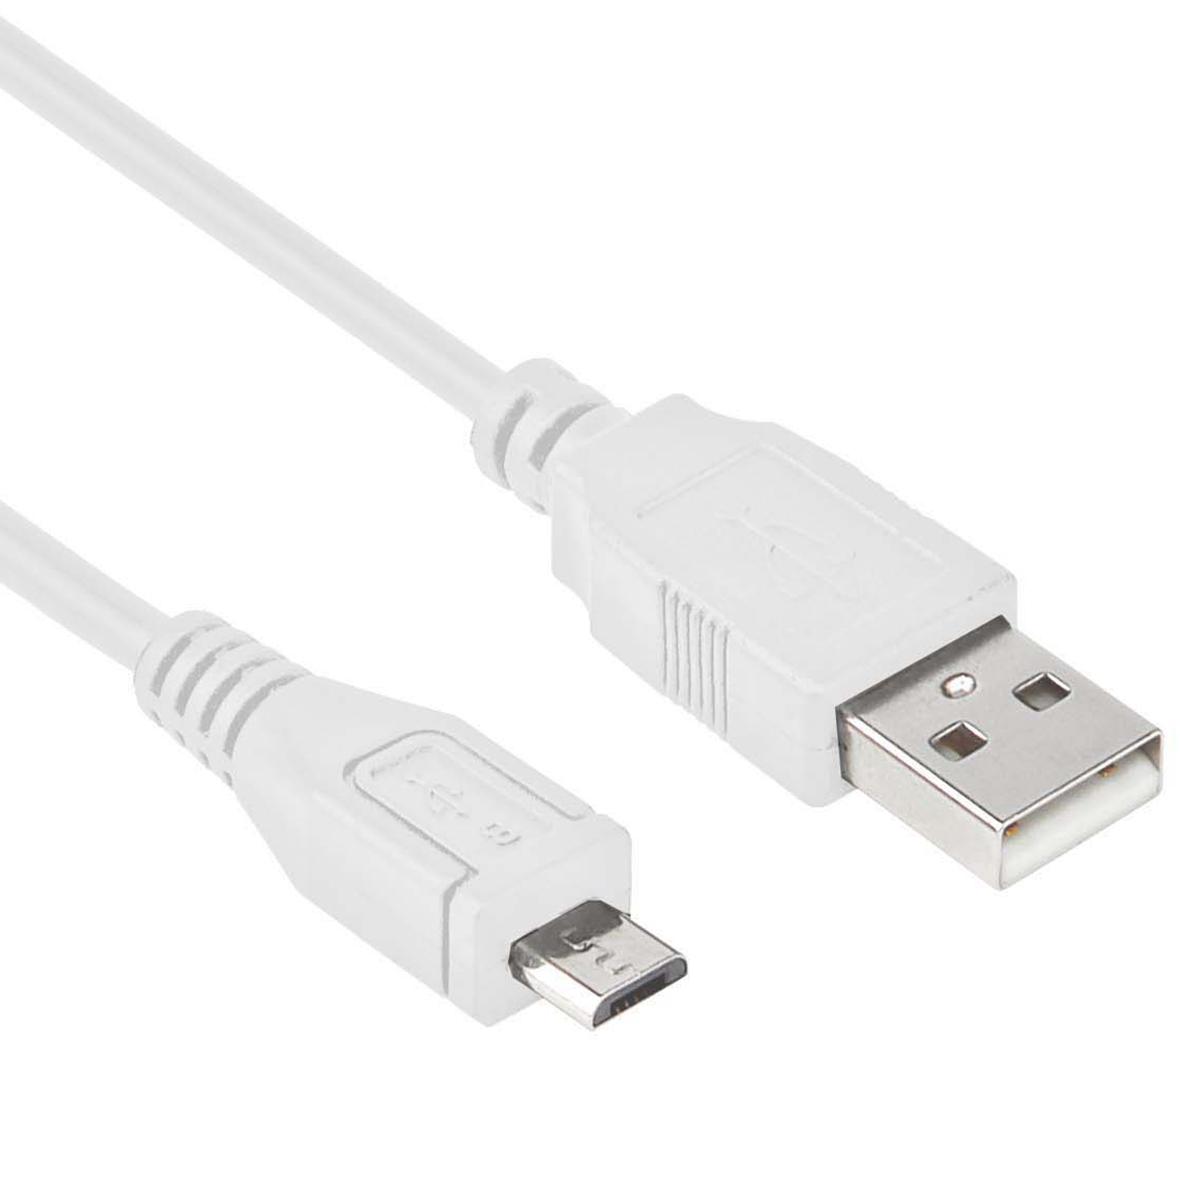 Image of USB 2.0 micro kabel - 1.8 meter - Wit - Goobay